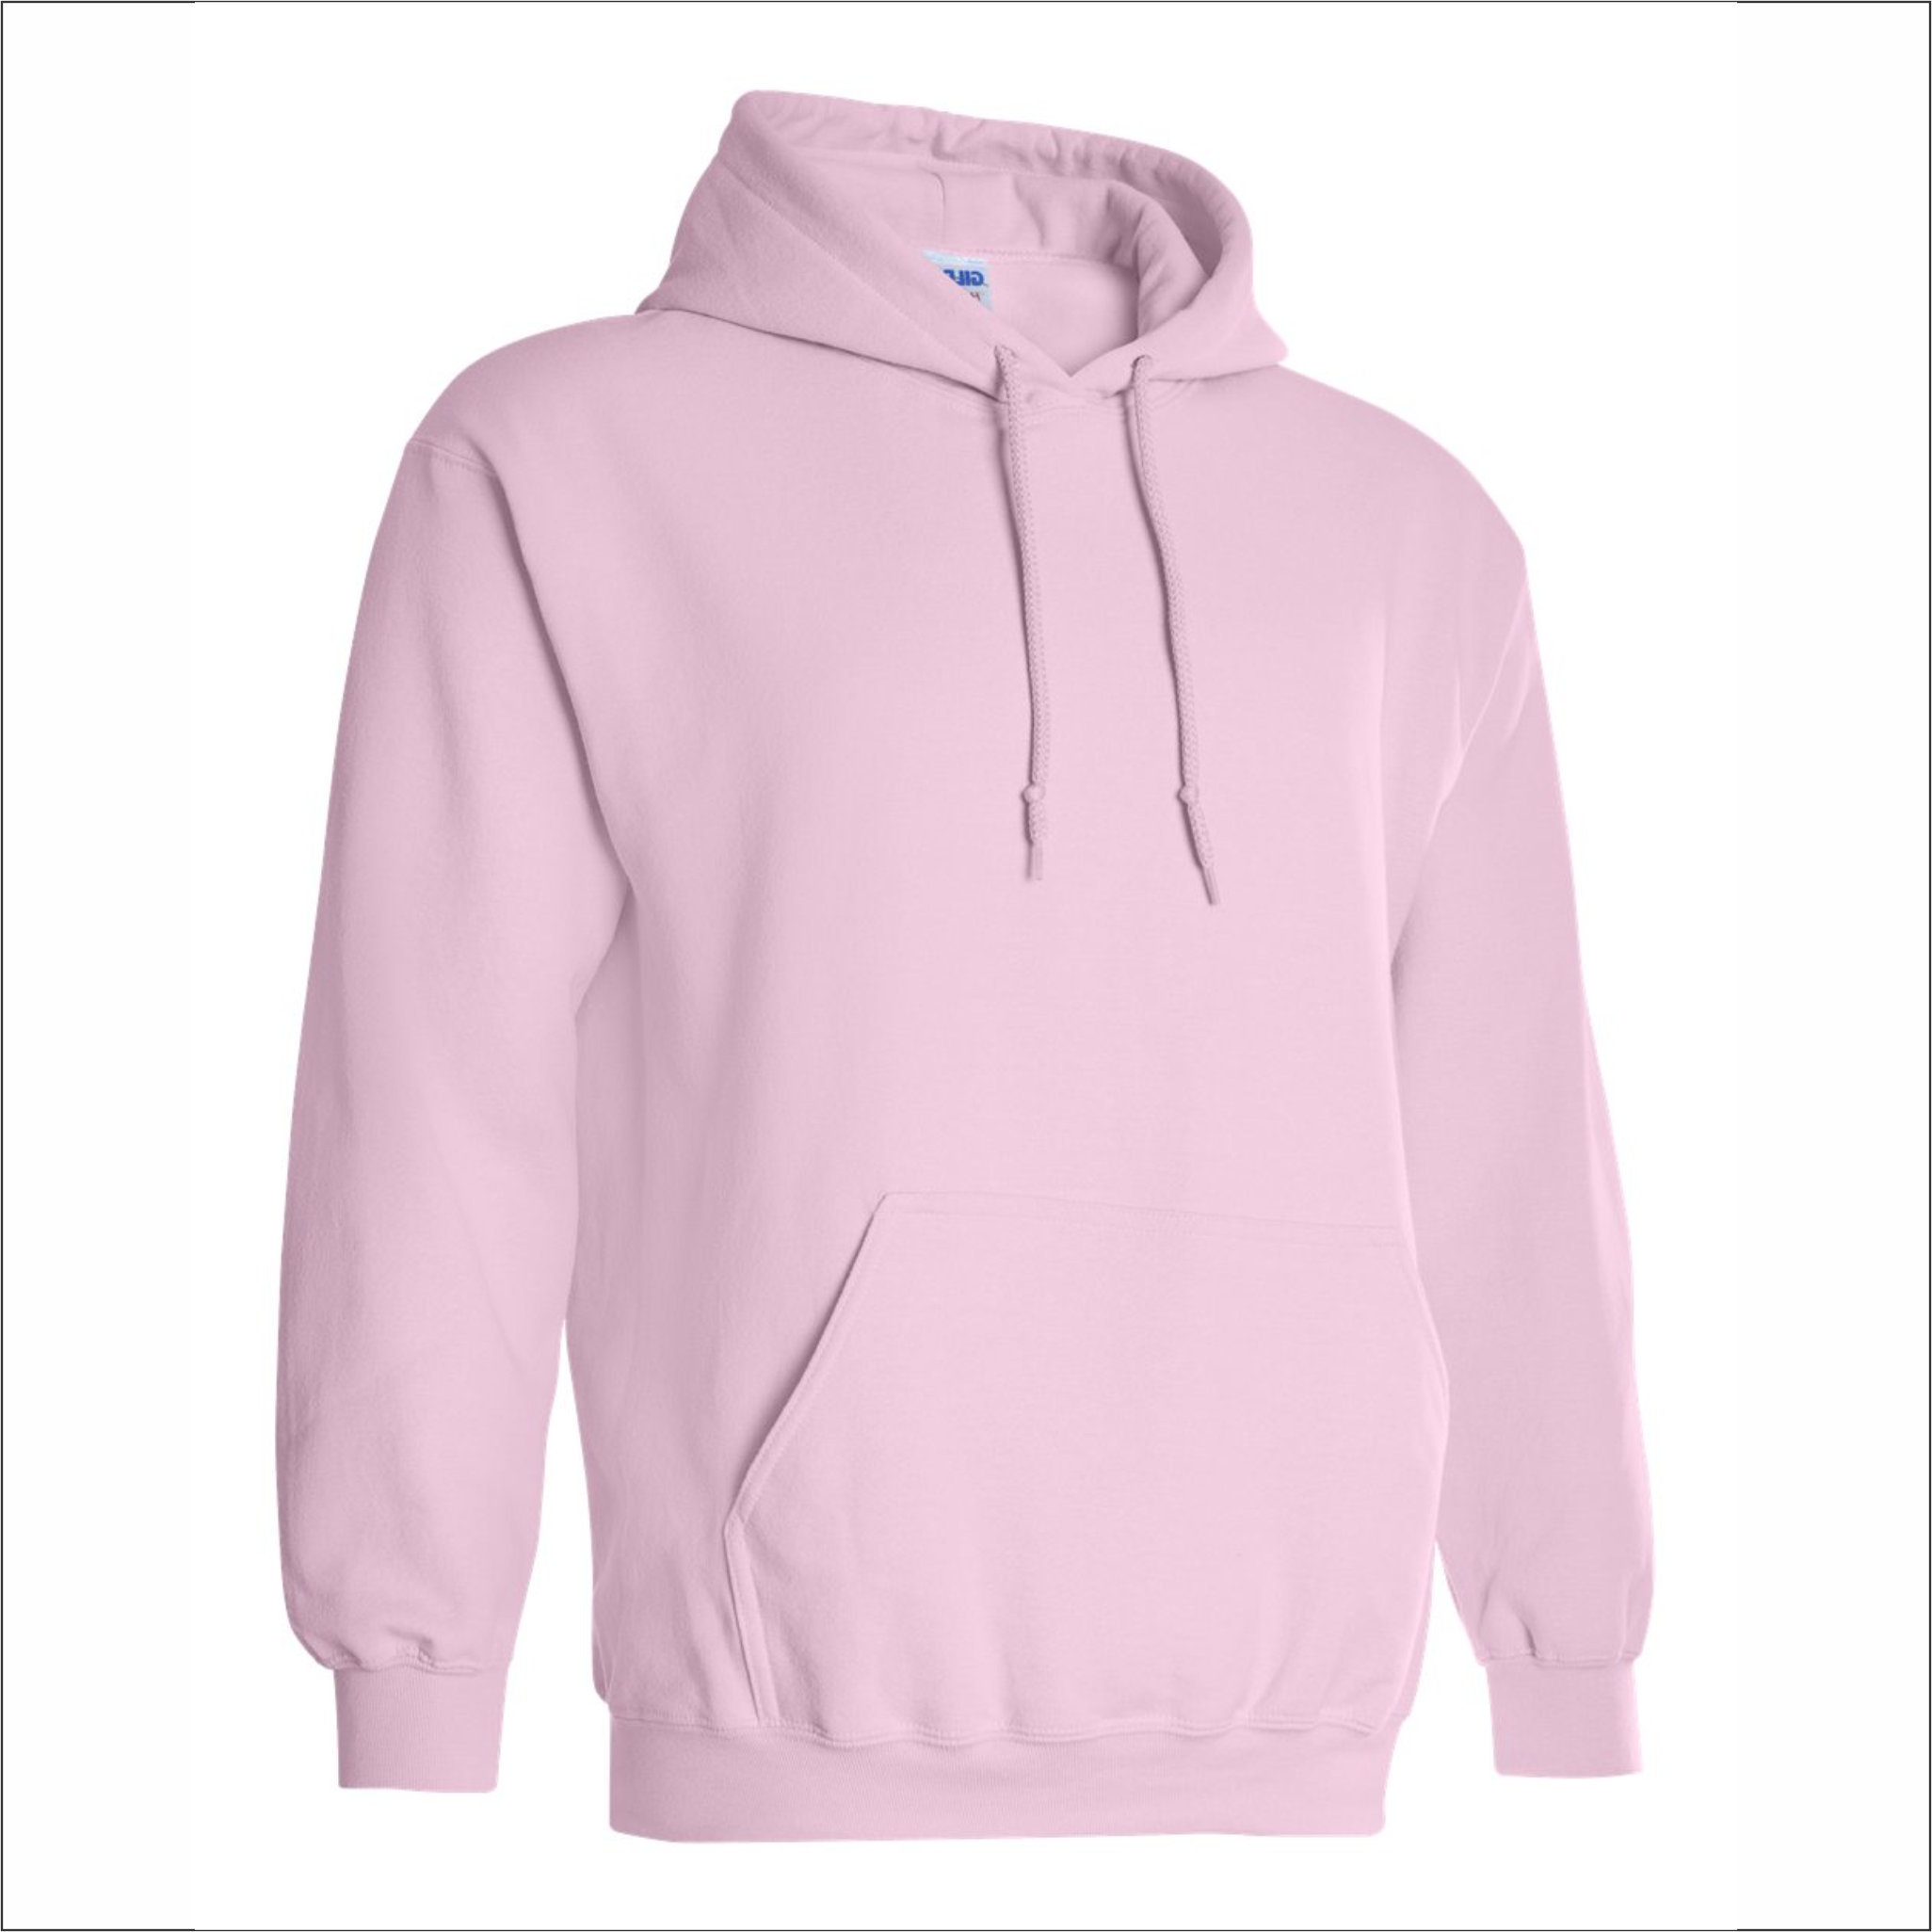 Adult Hoodie -Light Pink Cotton - Gildan 18500